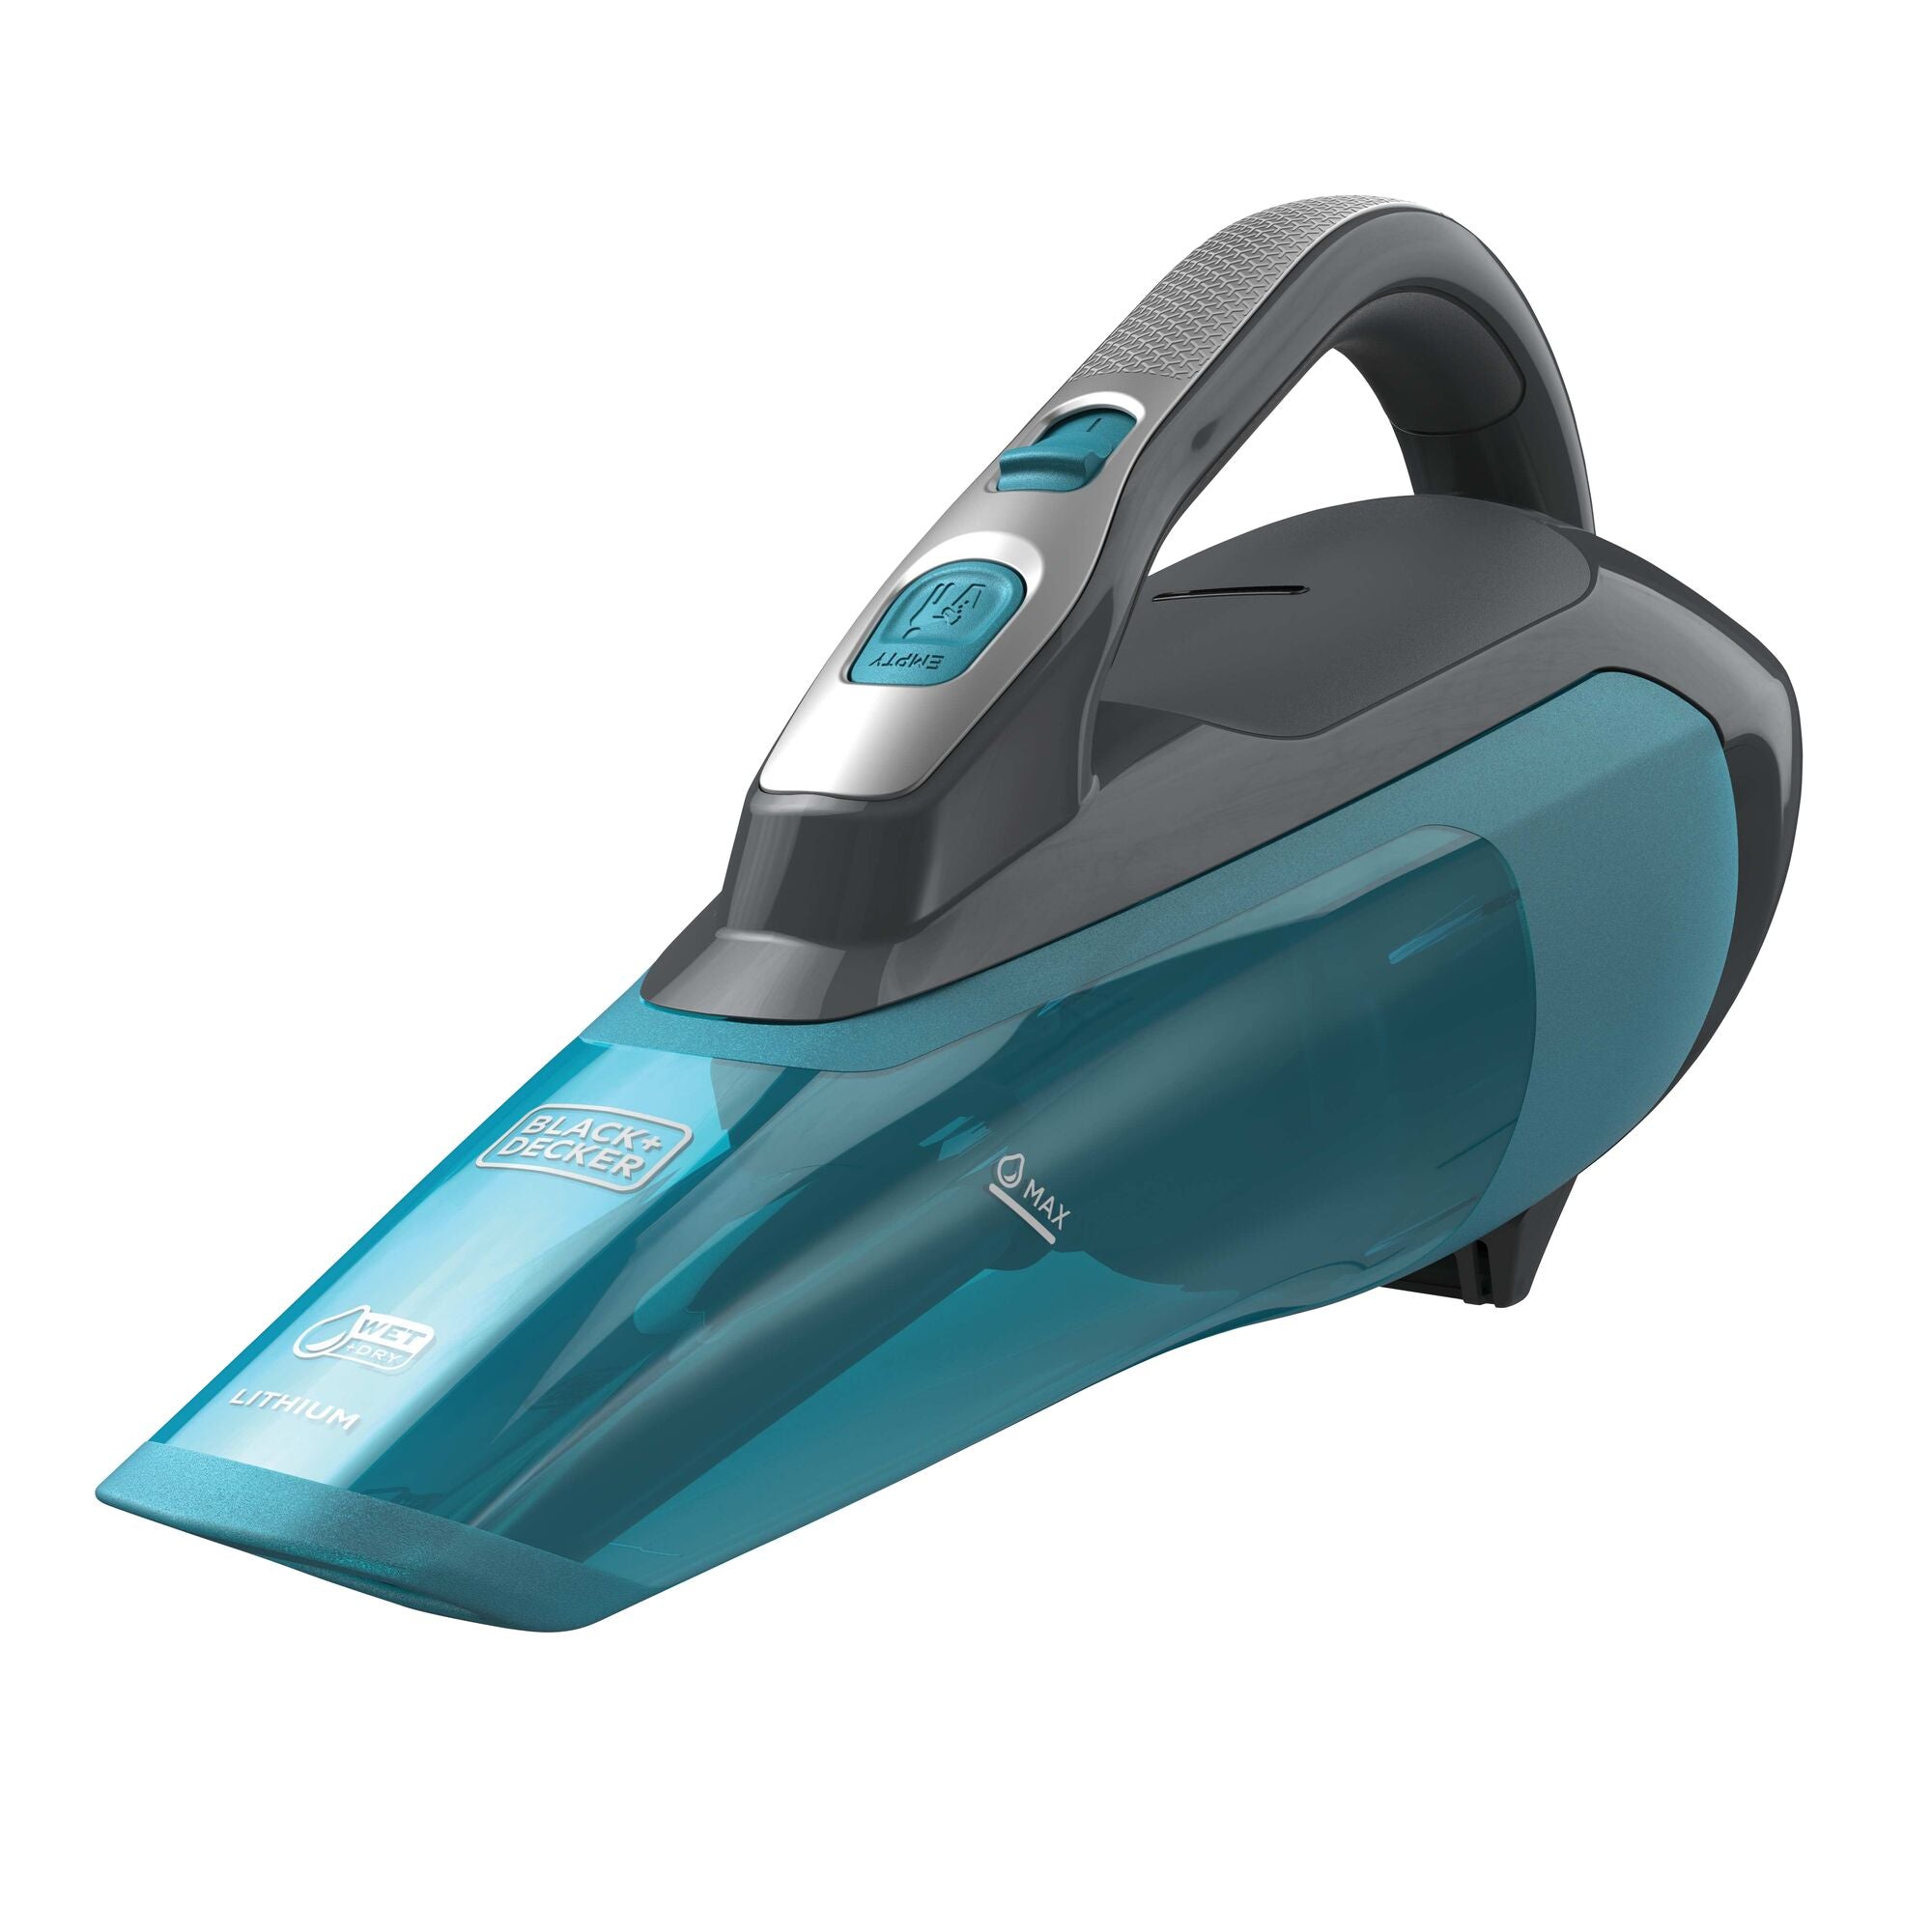 Dustbuster Advancedclean Cordless Wet/Dry Handheld Vacuum